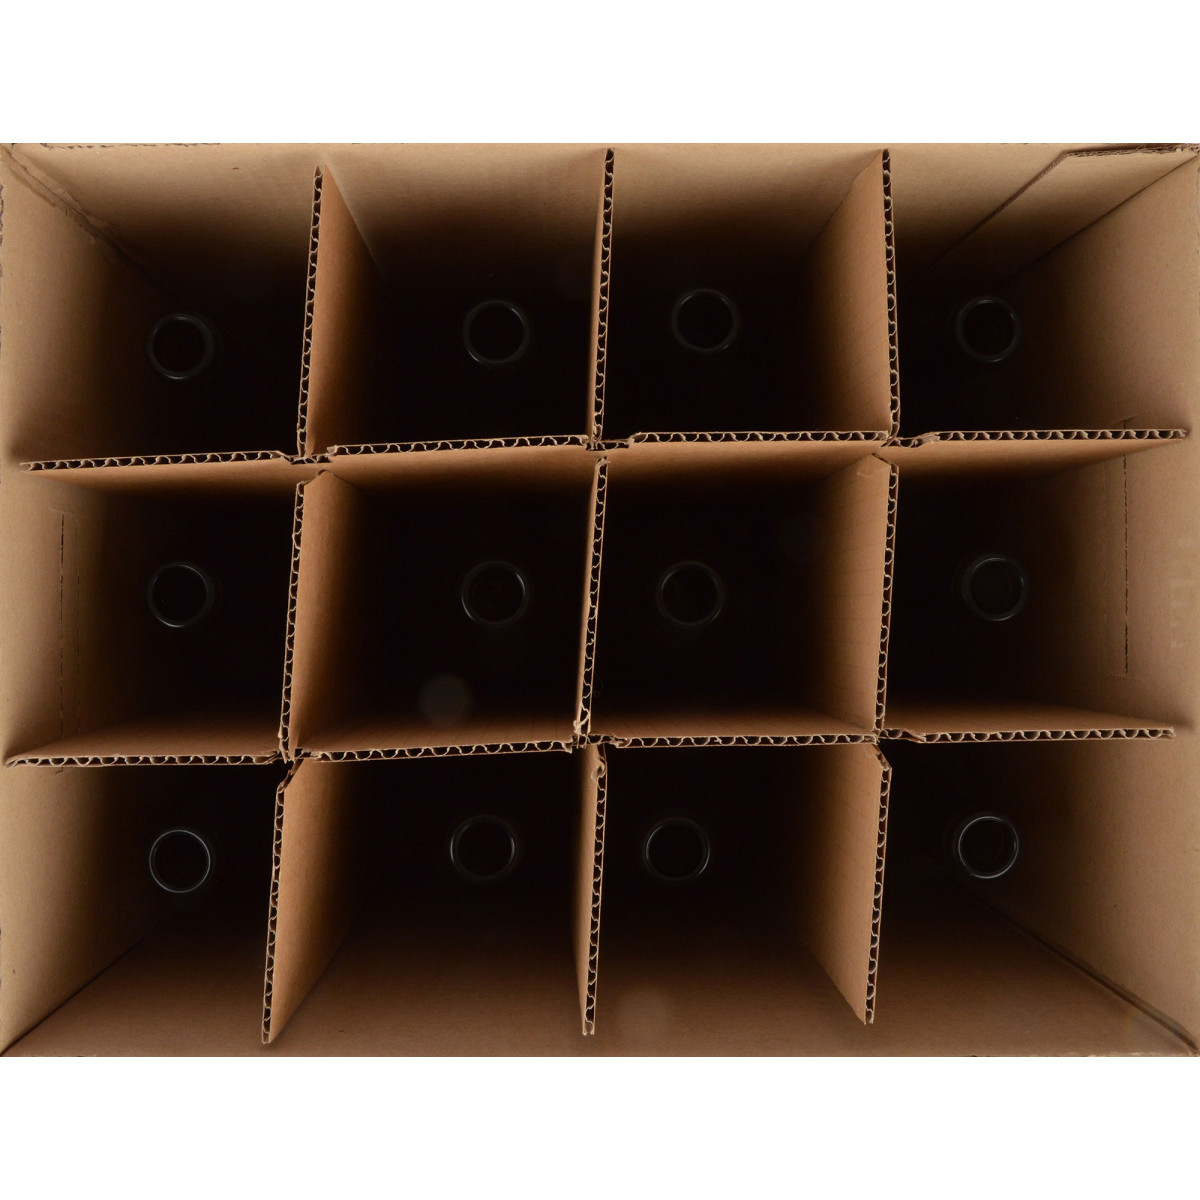 Wine bottle Burgundy 75 cl, olive green, box 12 pcs